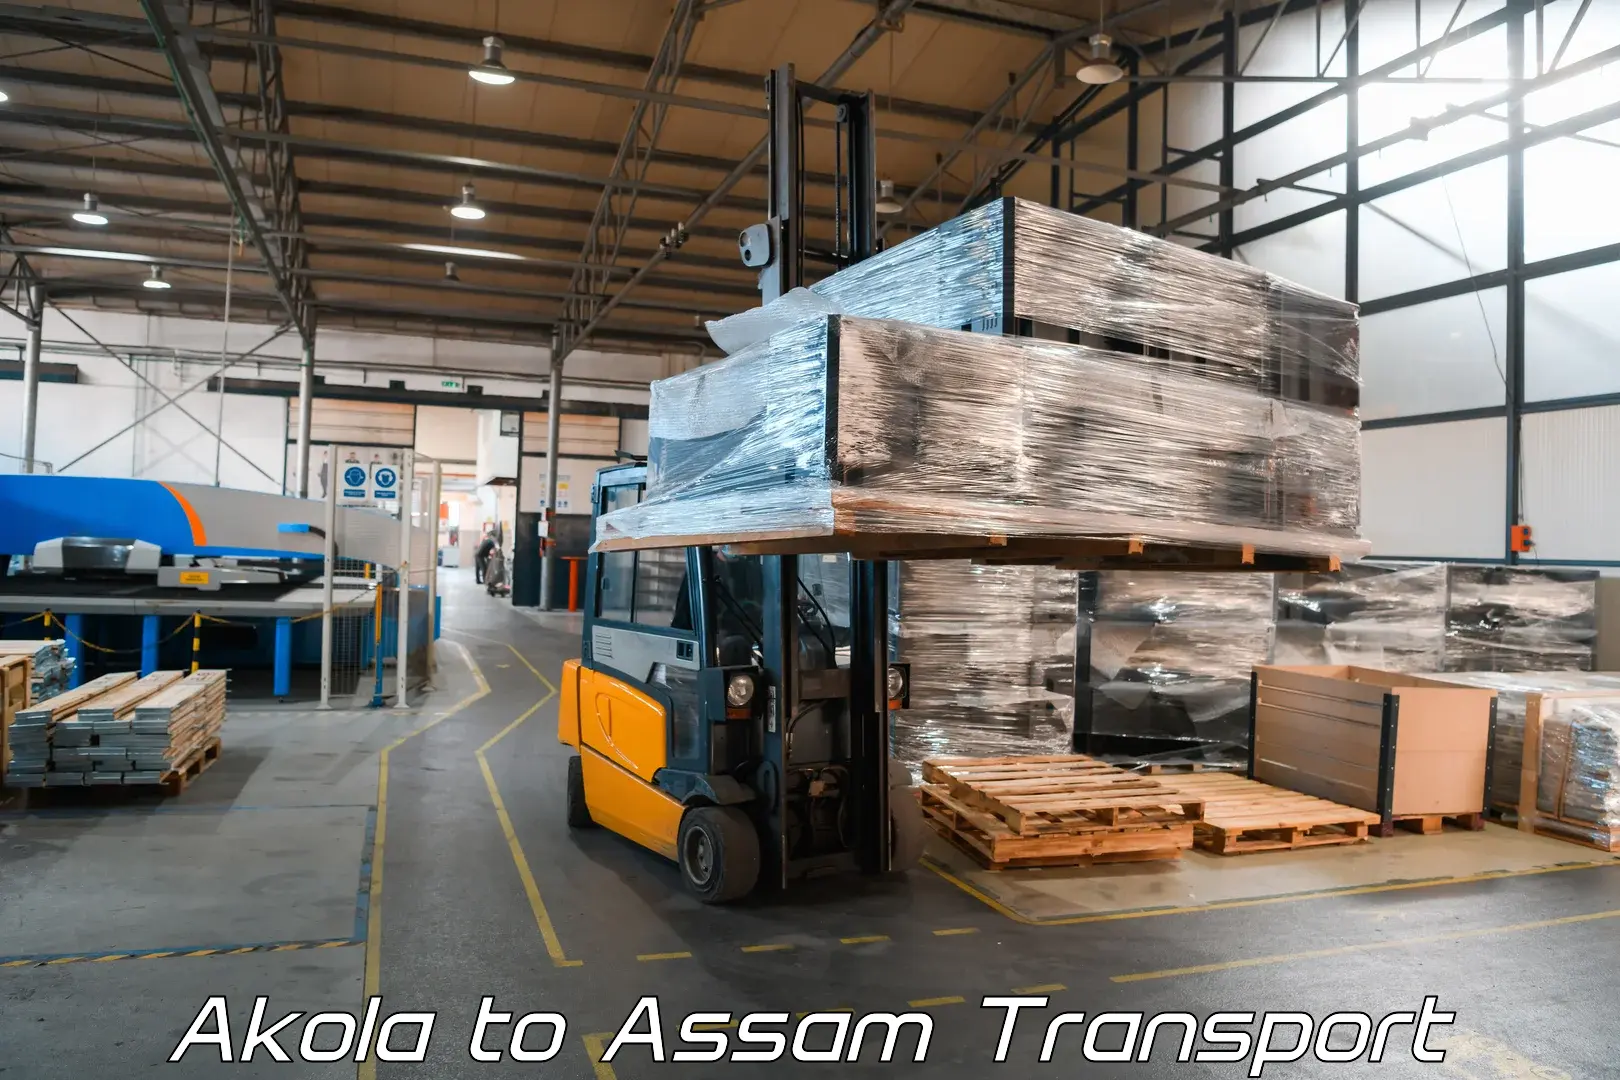 Online transport service Akola to Lala Assam